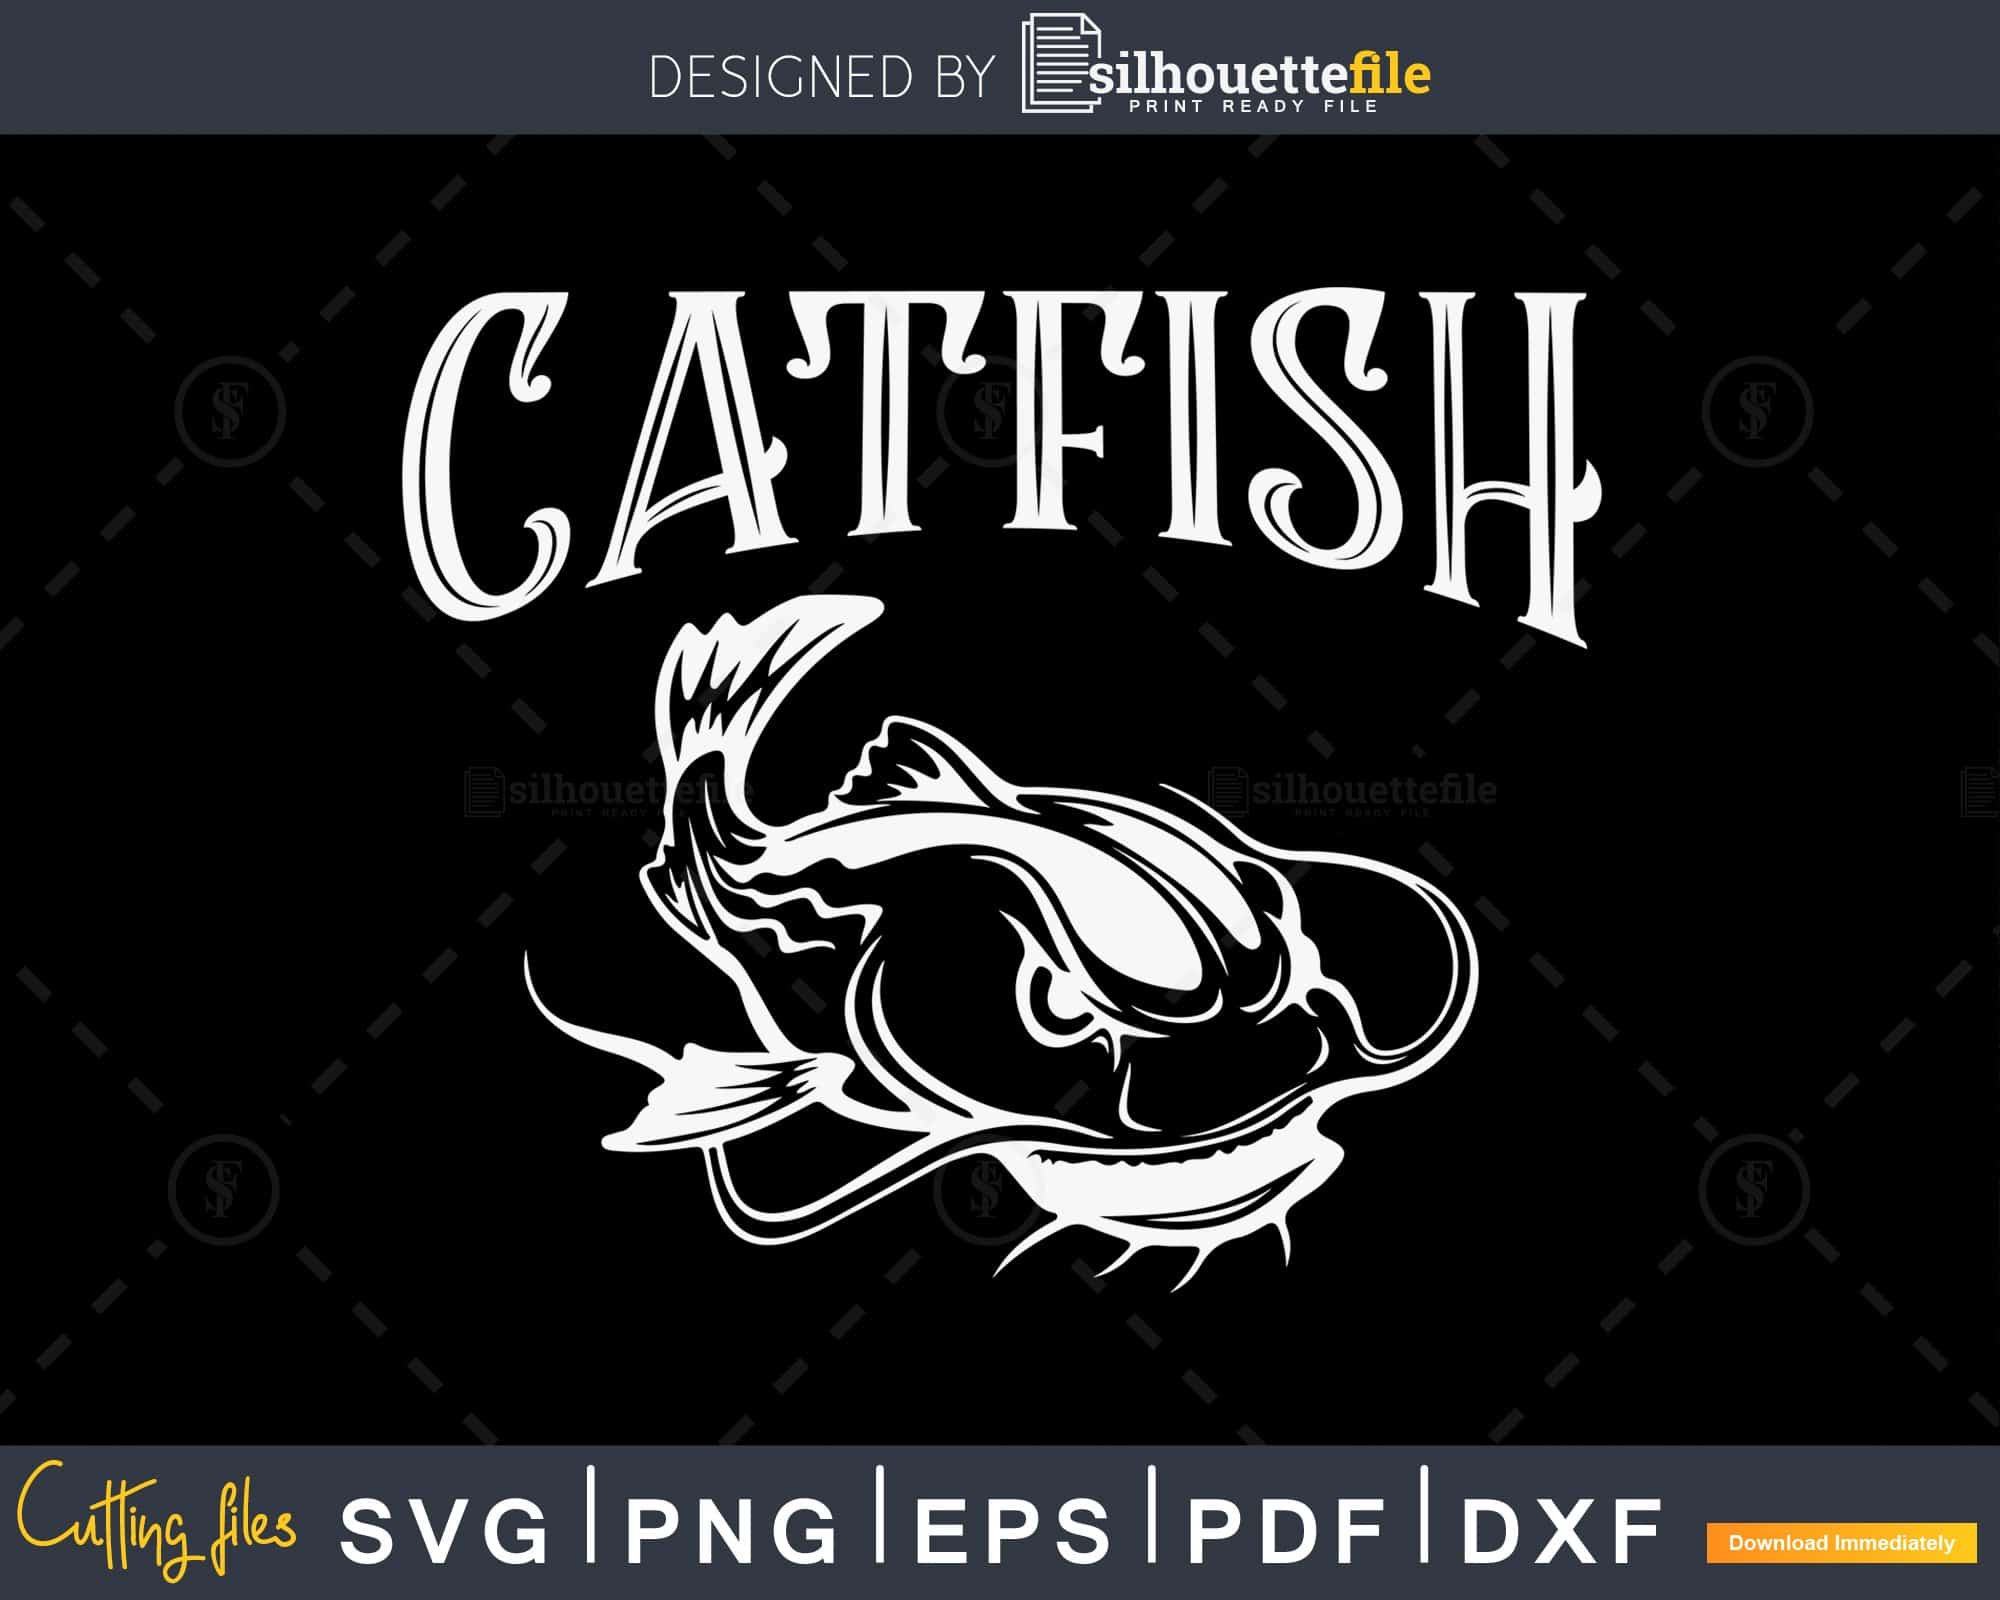 Master Baiter Fishing SVG File, Sublimation File, Vinyl Cut File, Funny  Fishing SVG 